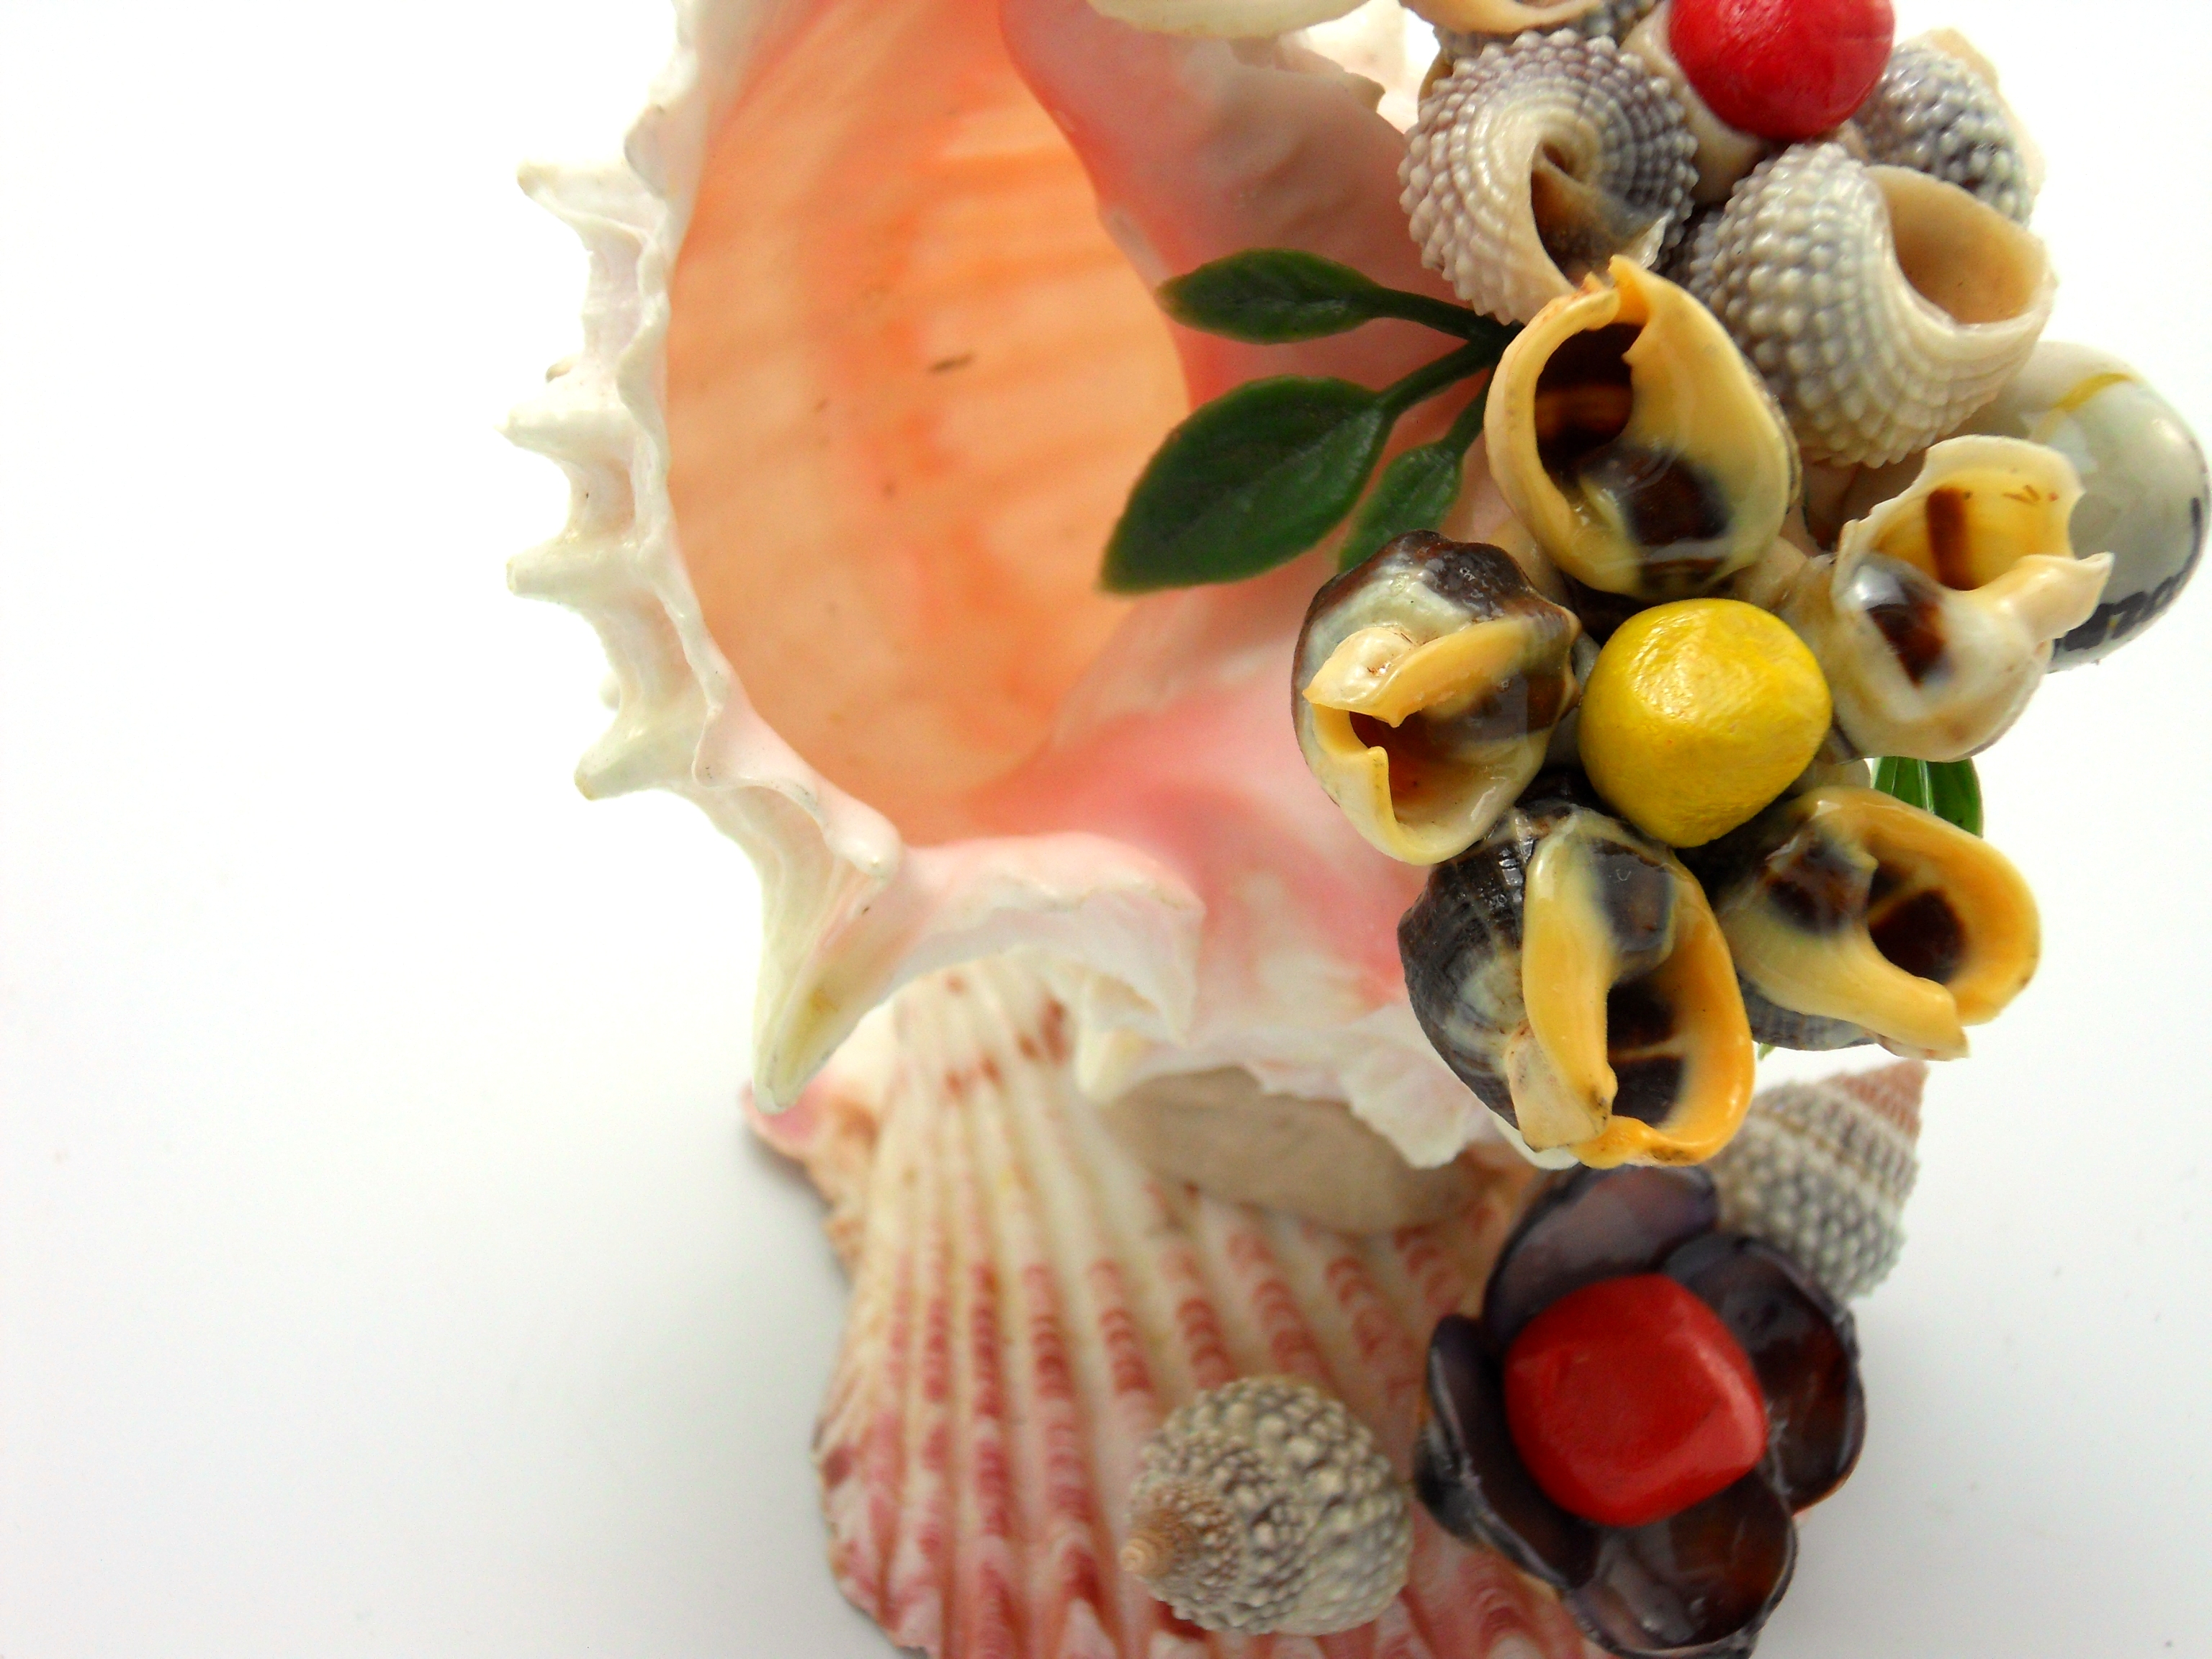 Sea-shell figure, Abstract, Sea, Nice, Object, HQ Photo